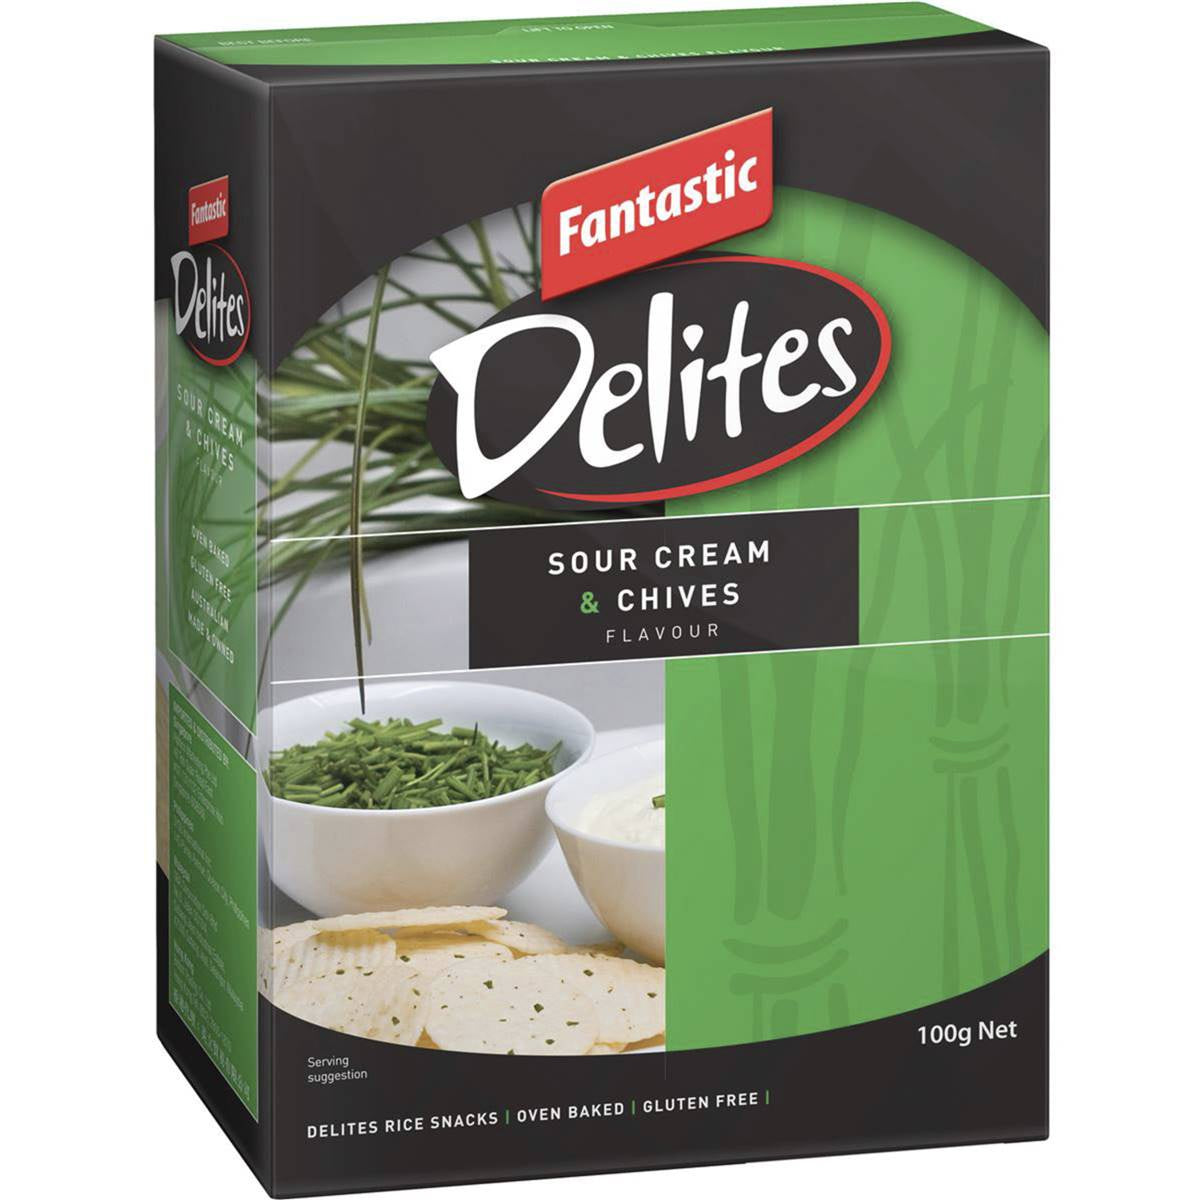 Fantastic Delites Sour Cream and Chives 100g